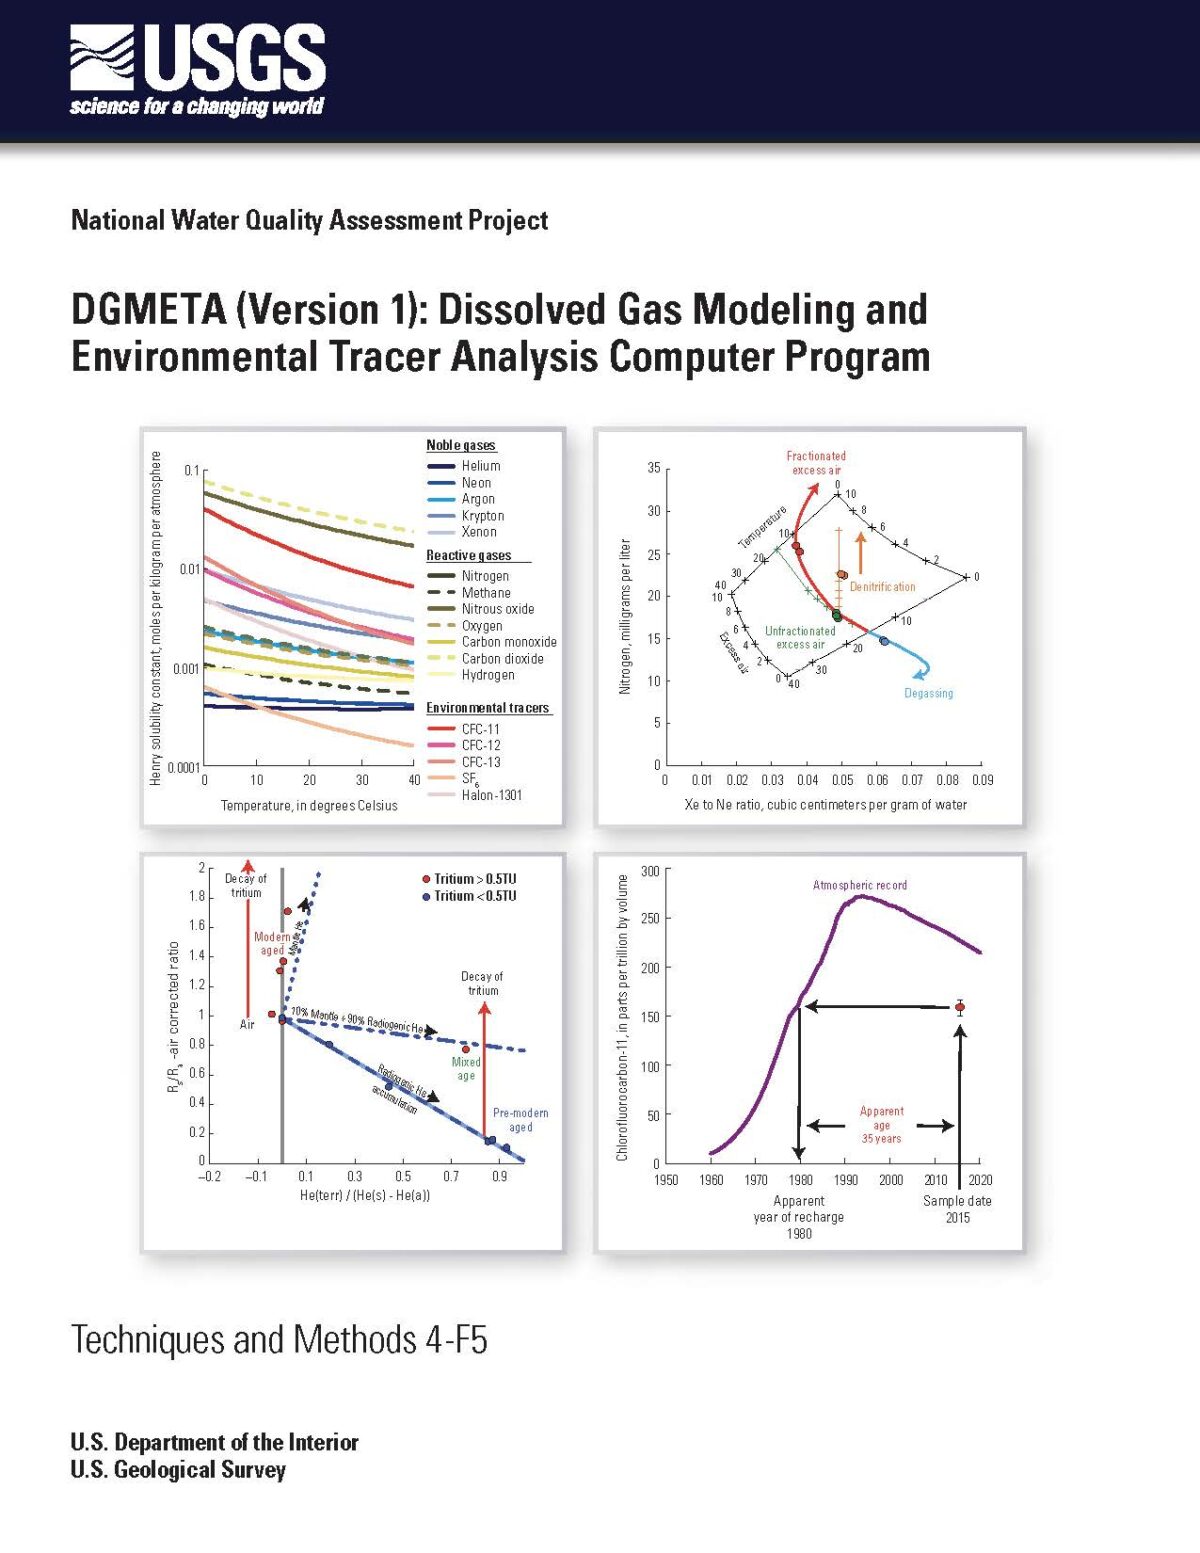 DGMETA (Version 1): Dissolved Gas Modeling and Environmental Tracer Analysis Computer Program